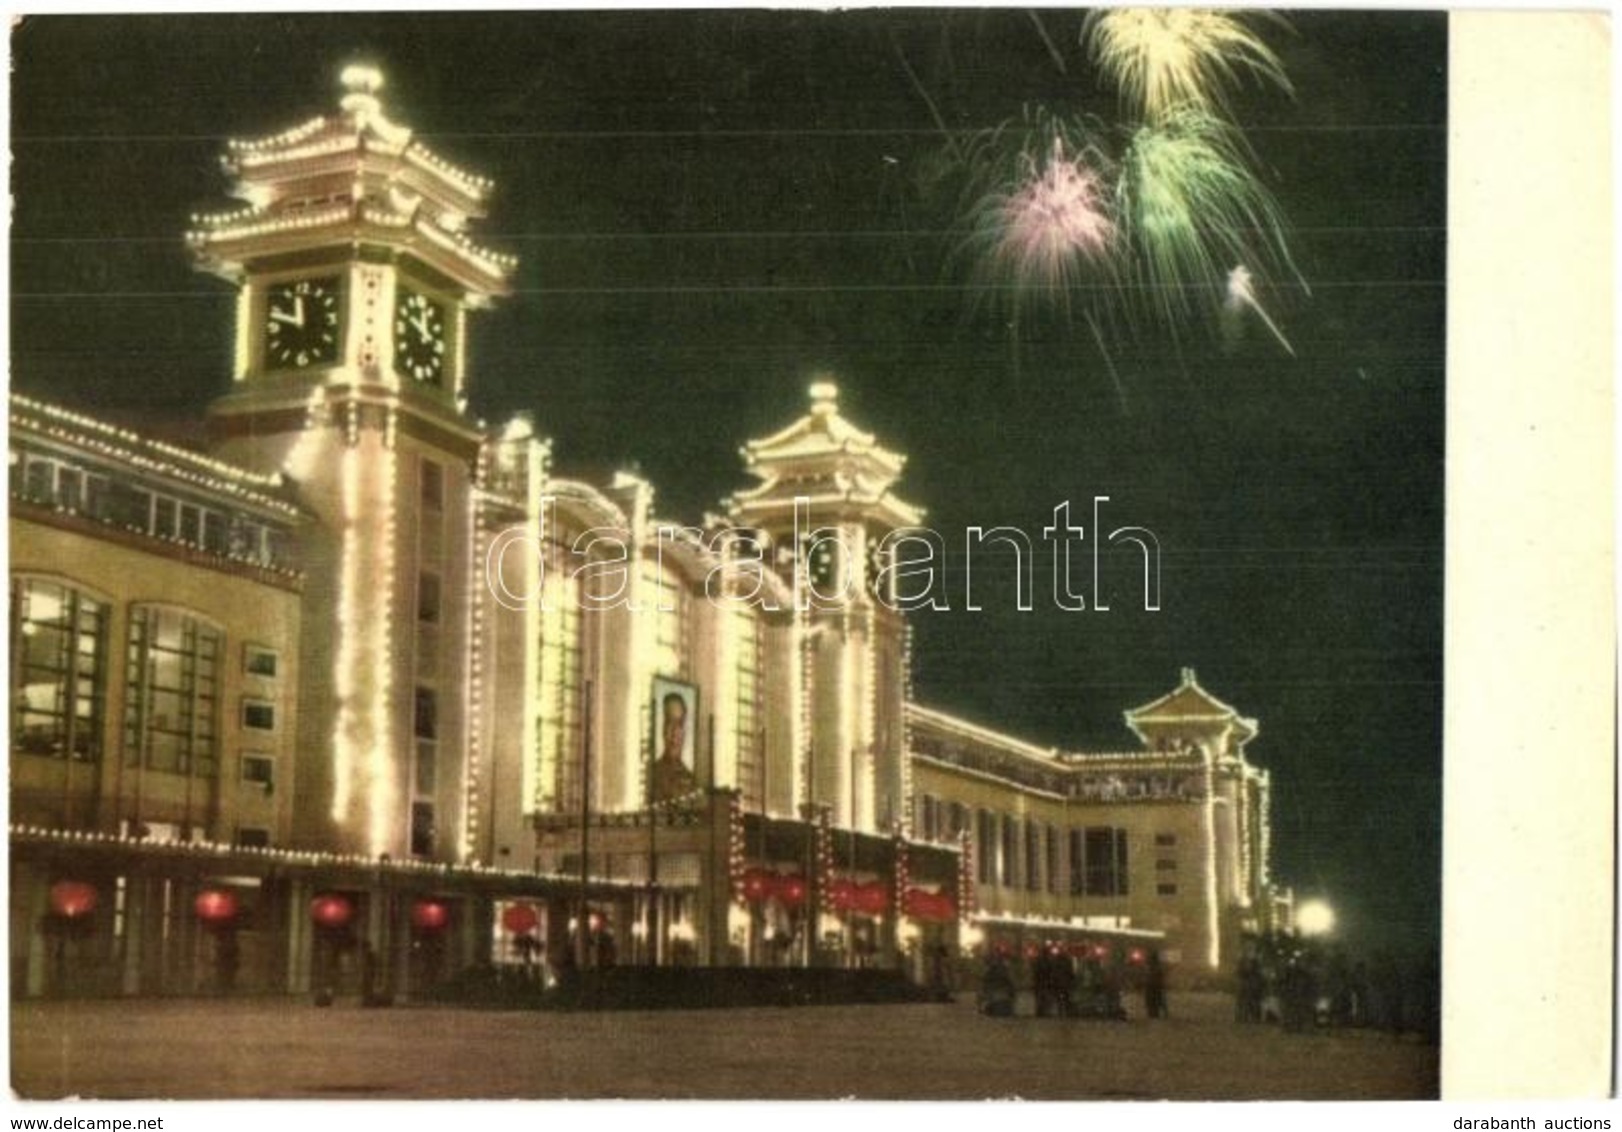 ** * 37 Db Modern Kínai Városképes Lap, Főleg A 60-as évekből / 37 Modern Chinese Town-view Postcards, Mainly From The 6 - Non Classés